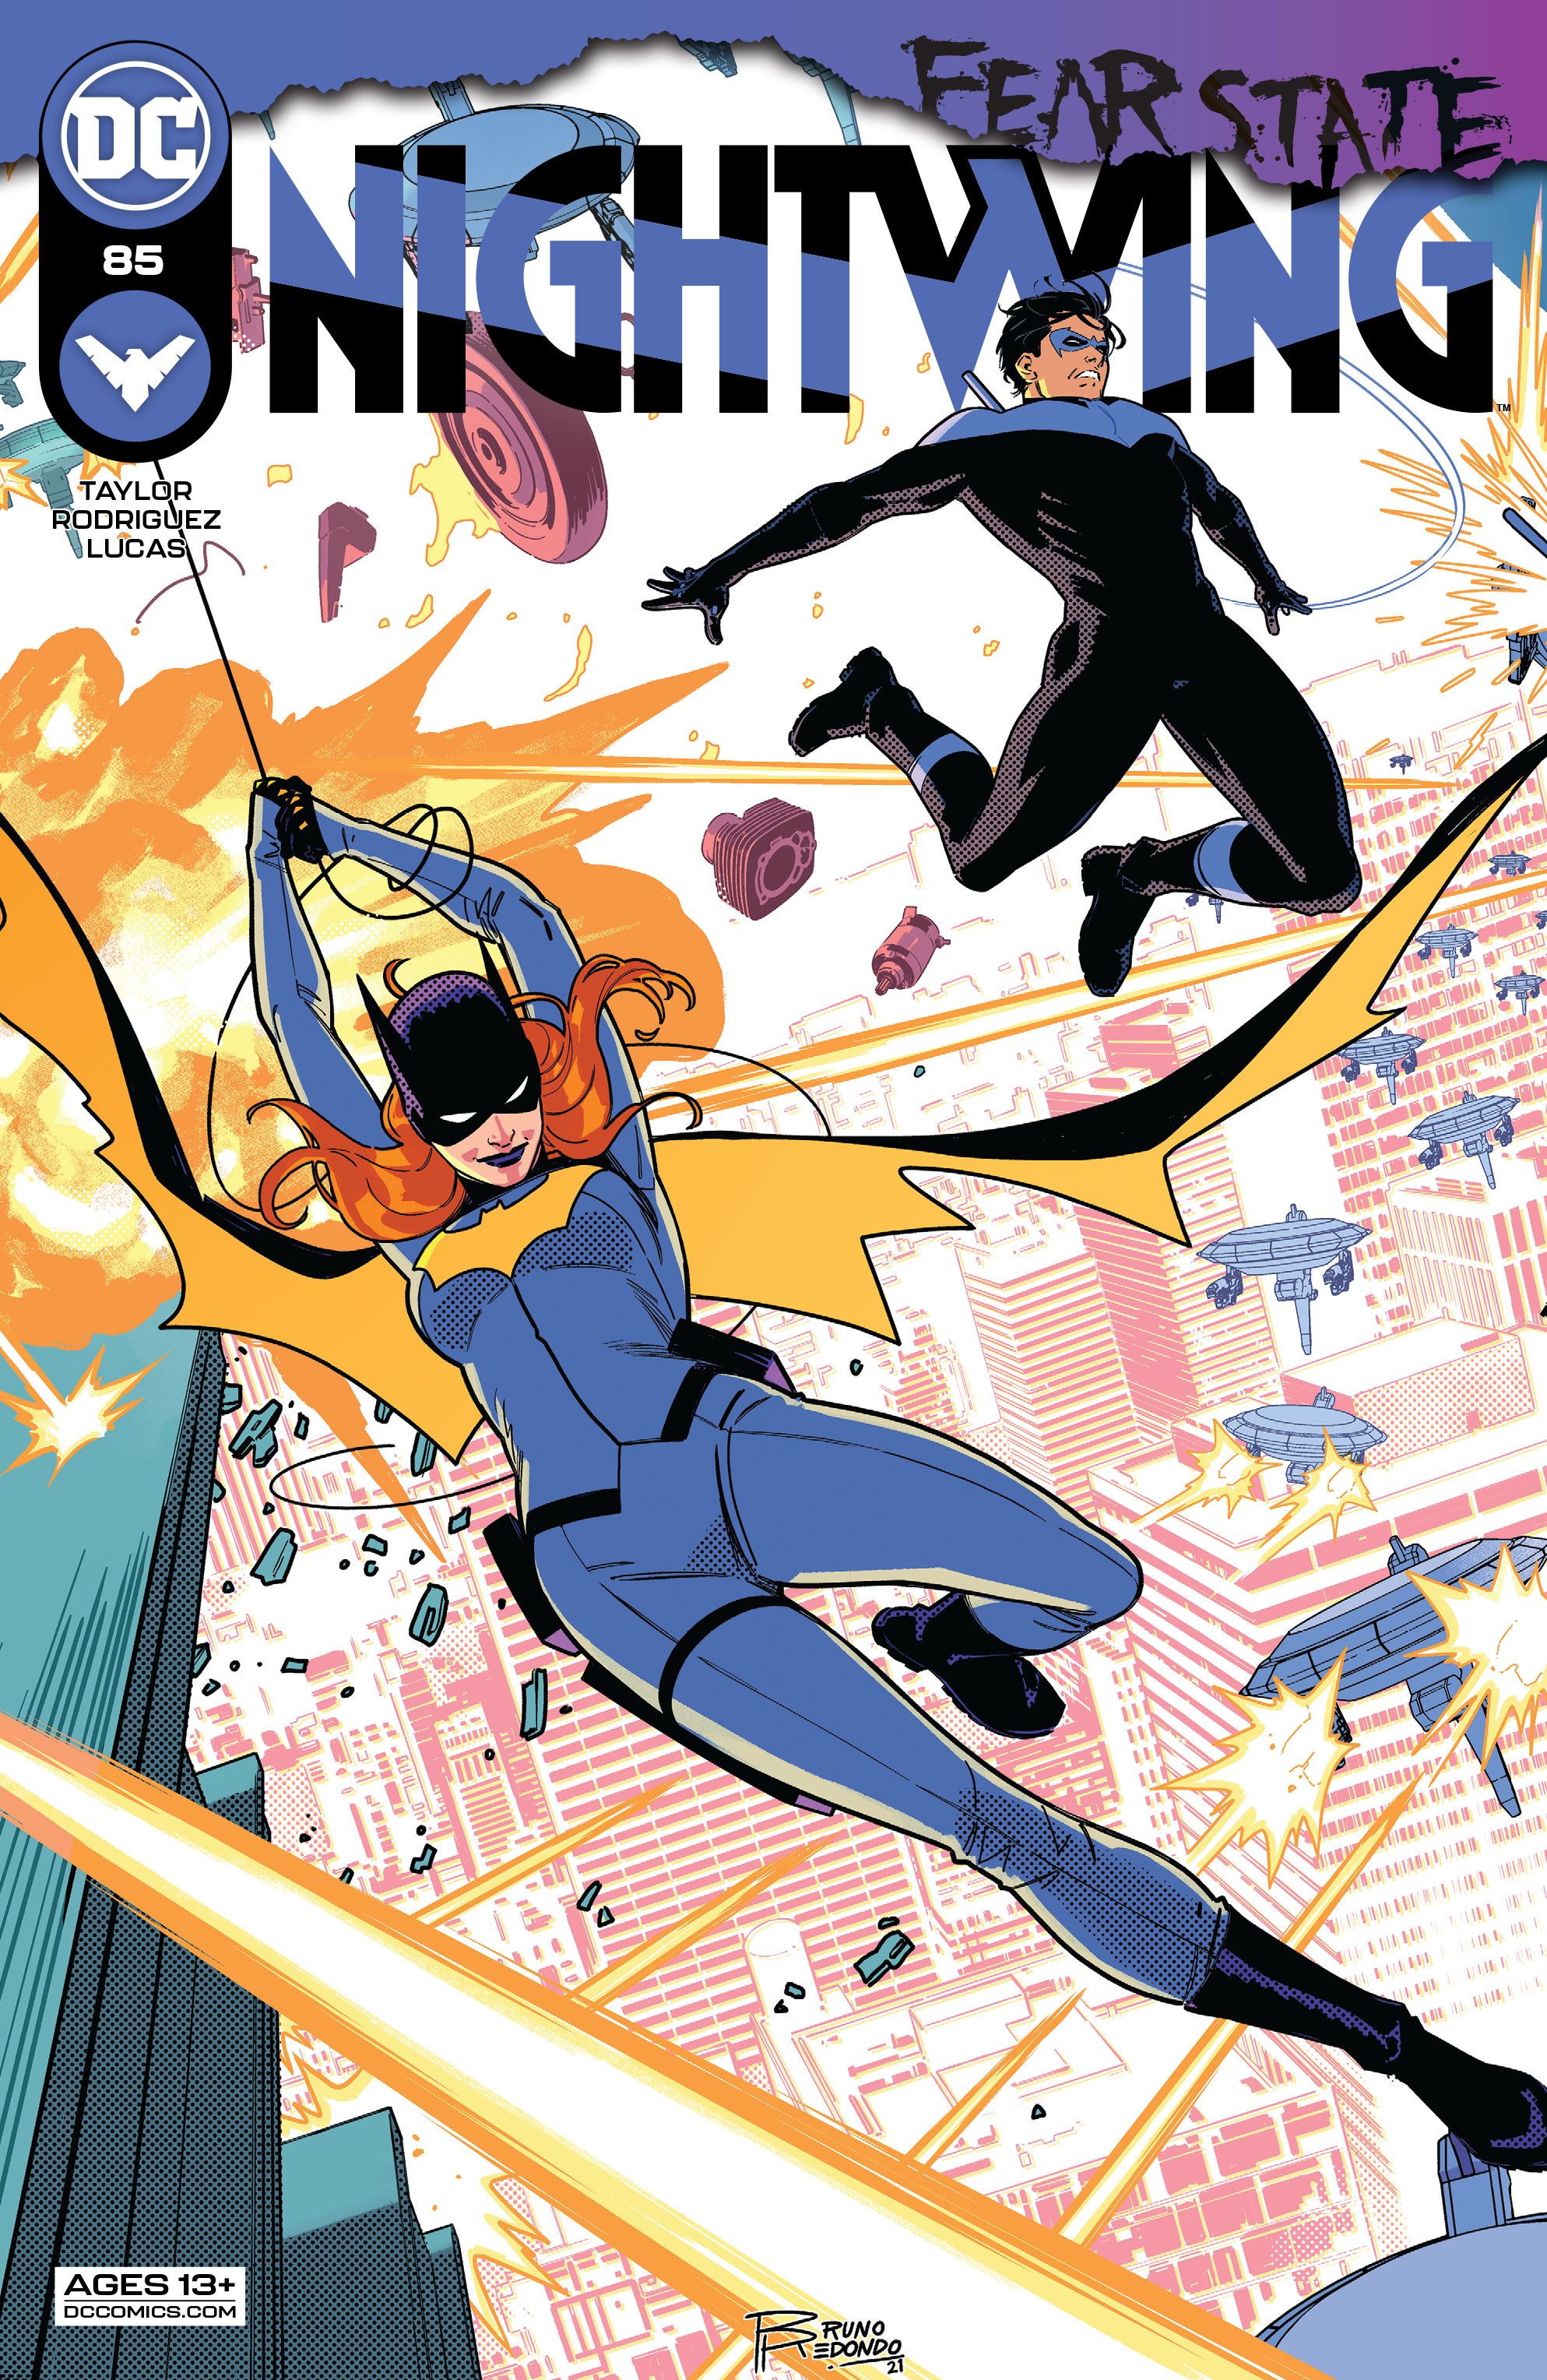 Nightwing & Batgirl Are Reuniting To Face Barbaras Dark Counterpart